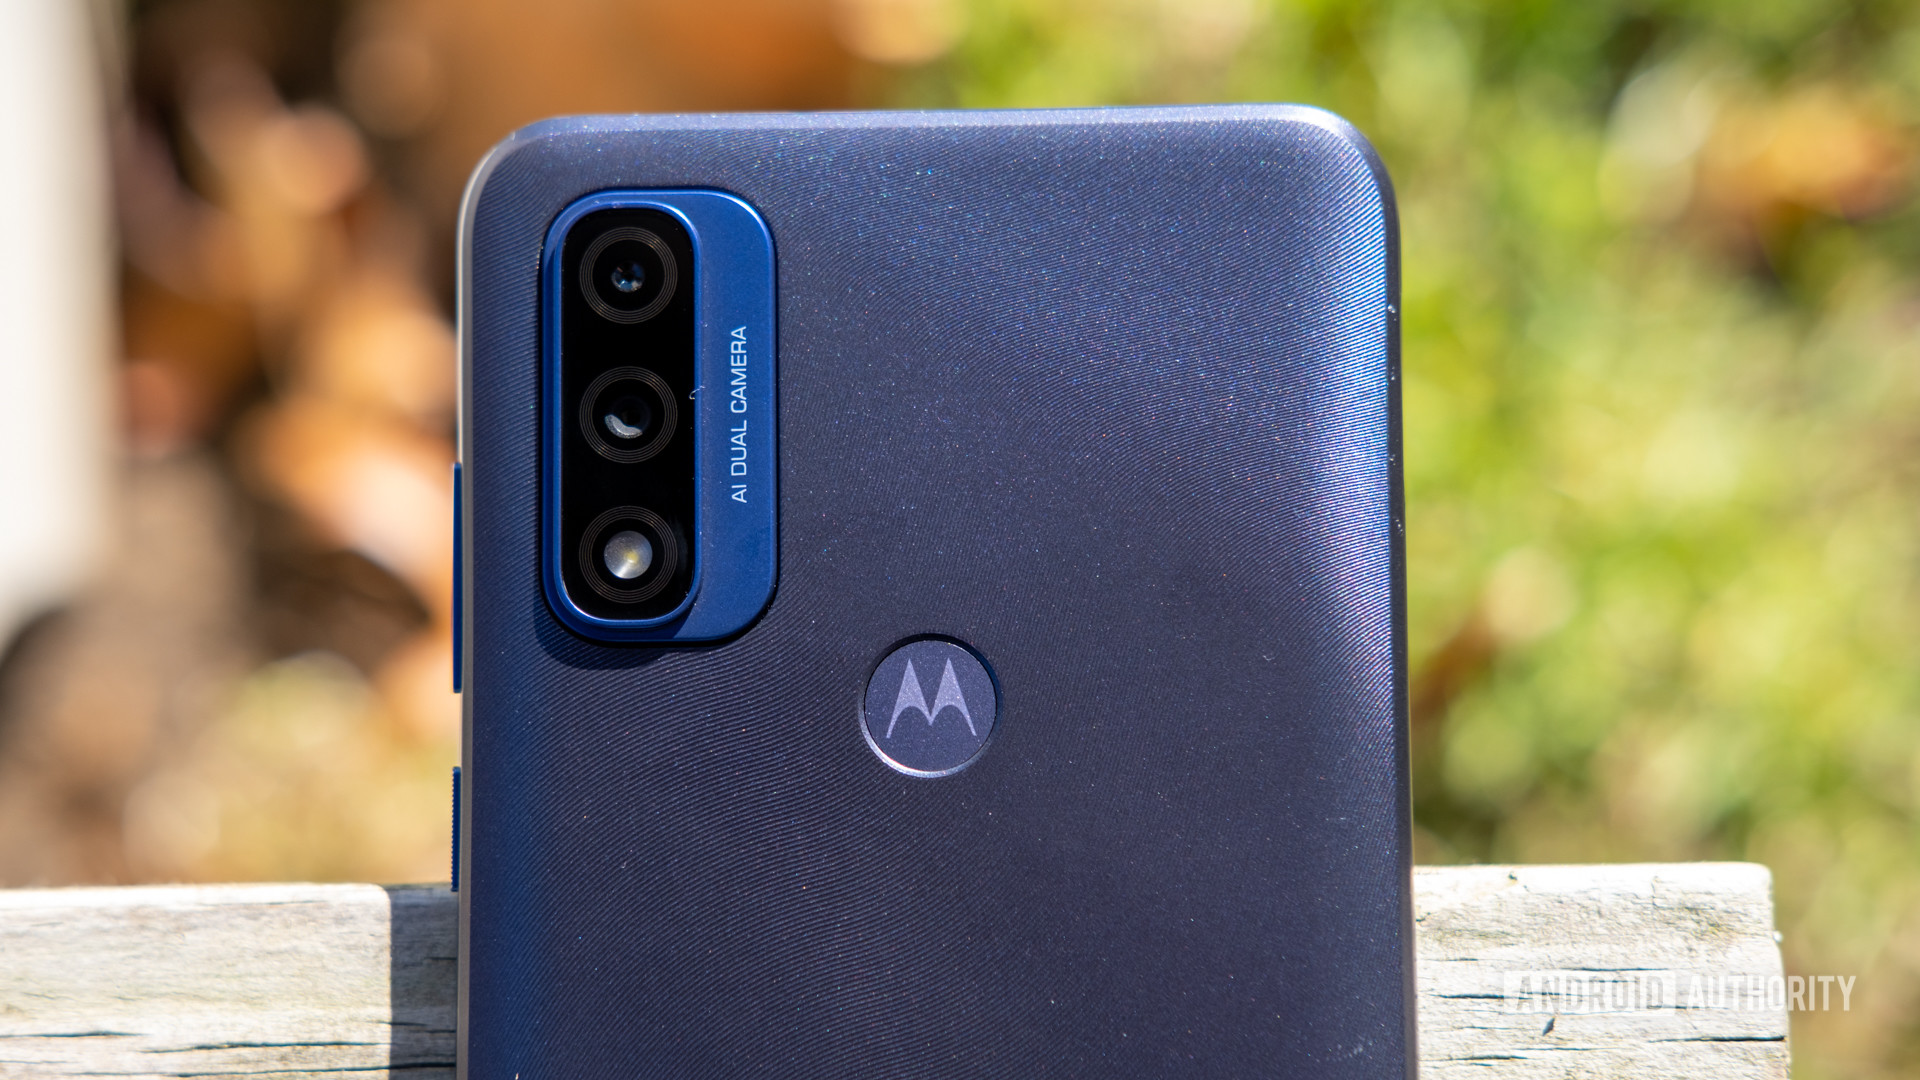 The Motorola Moto G Pure cameras